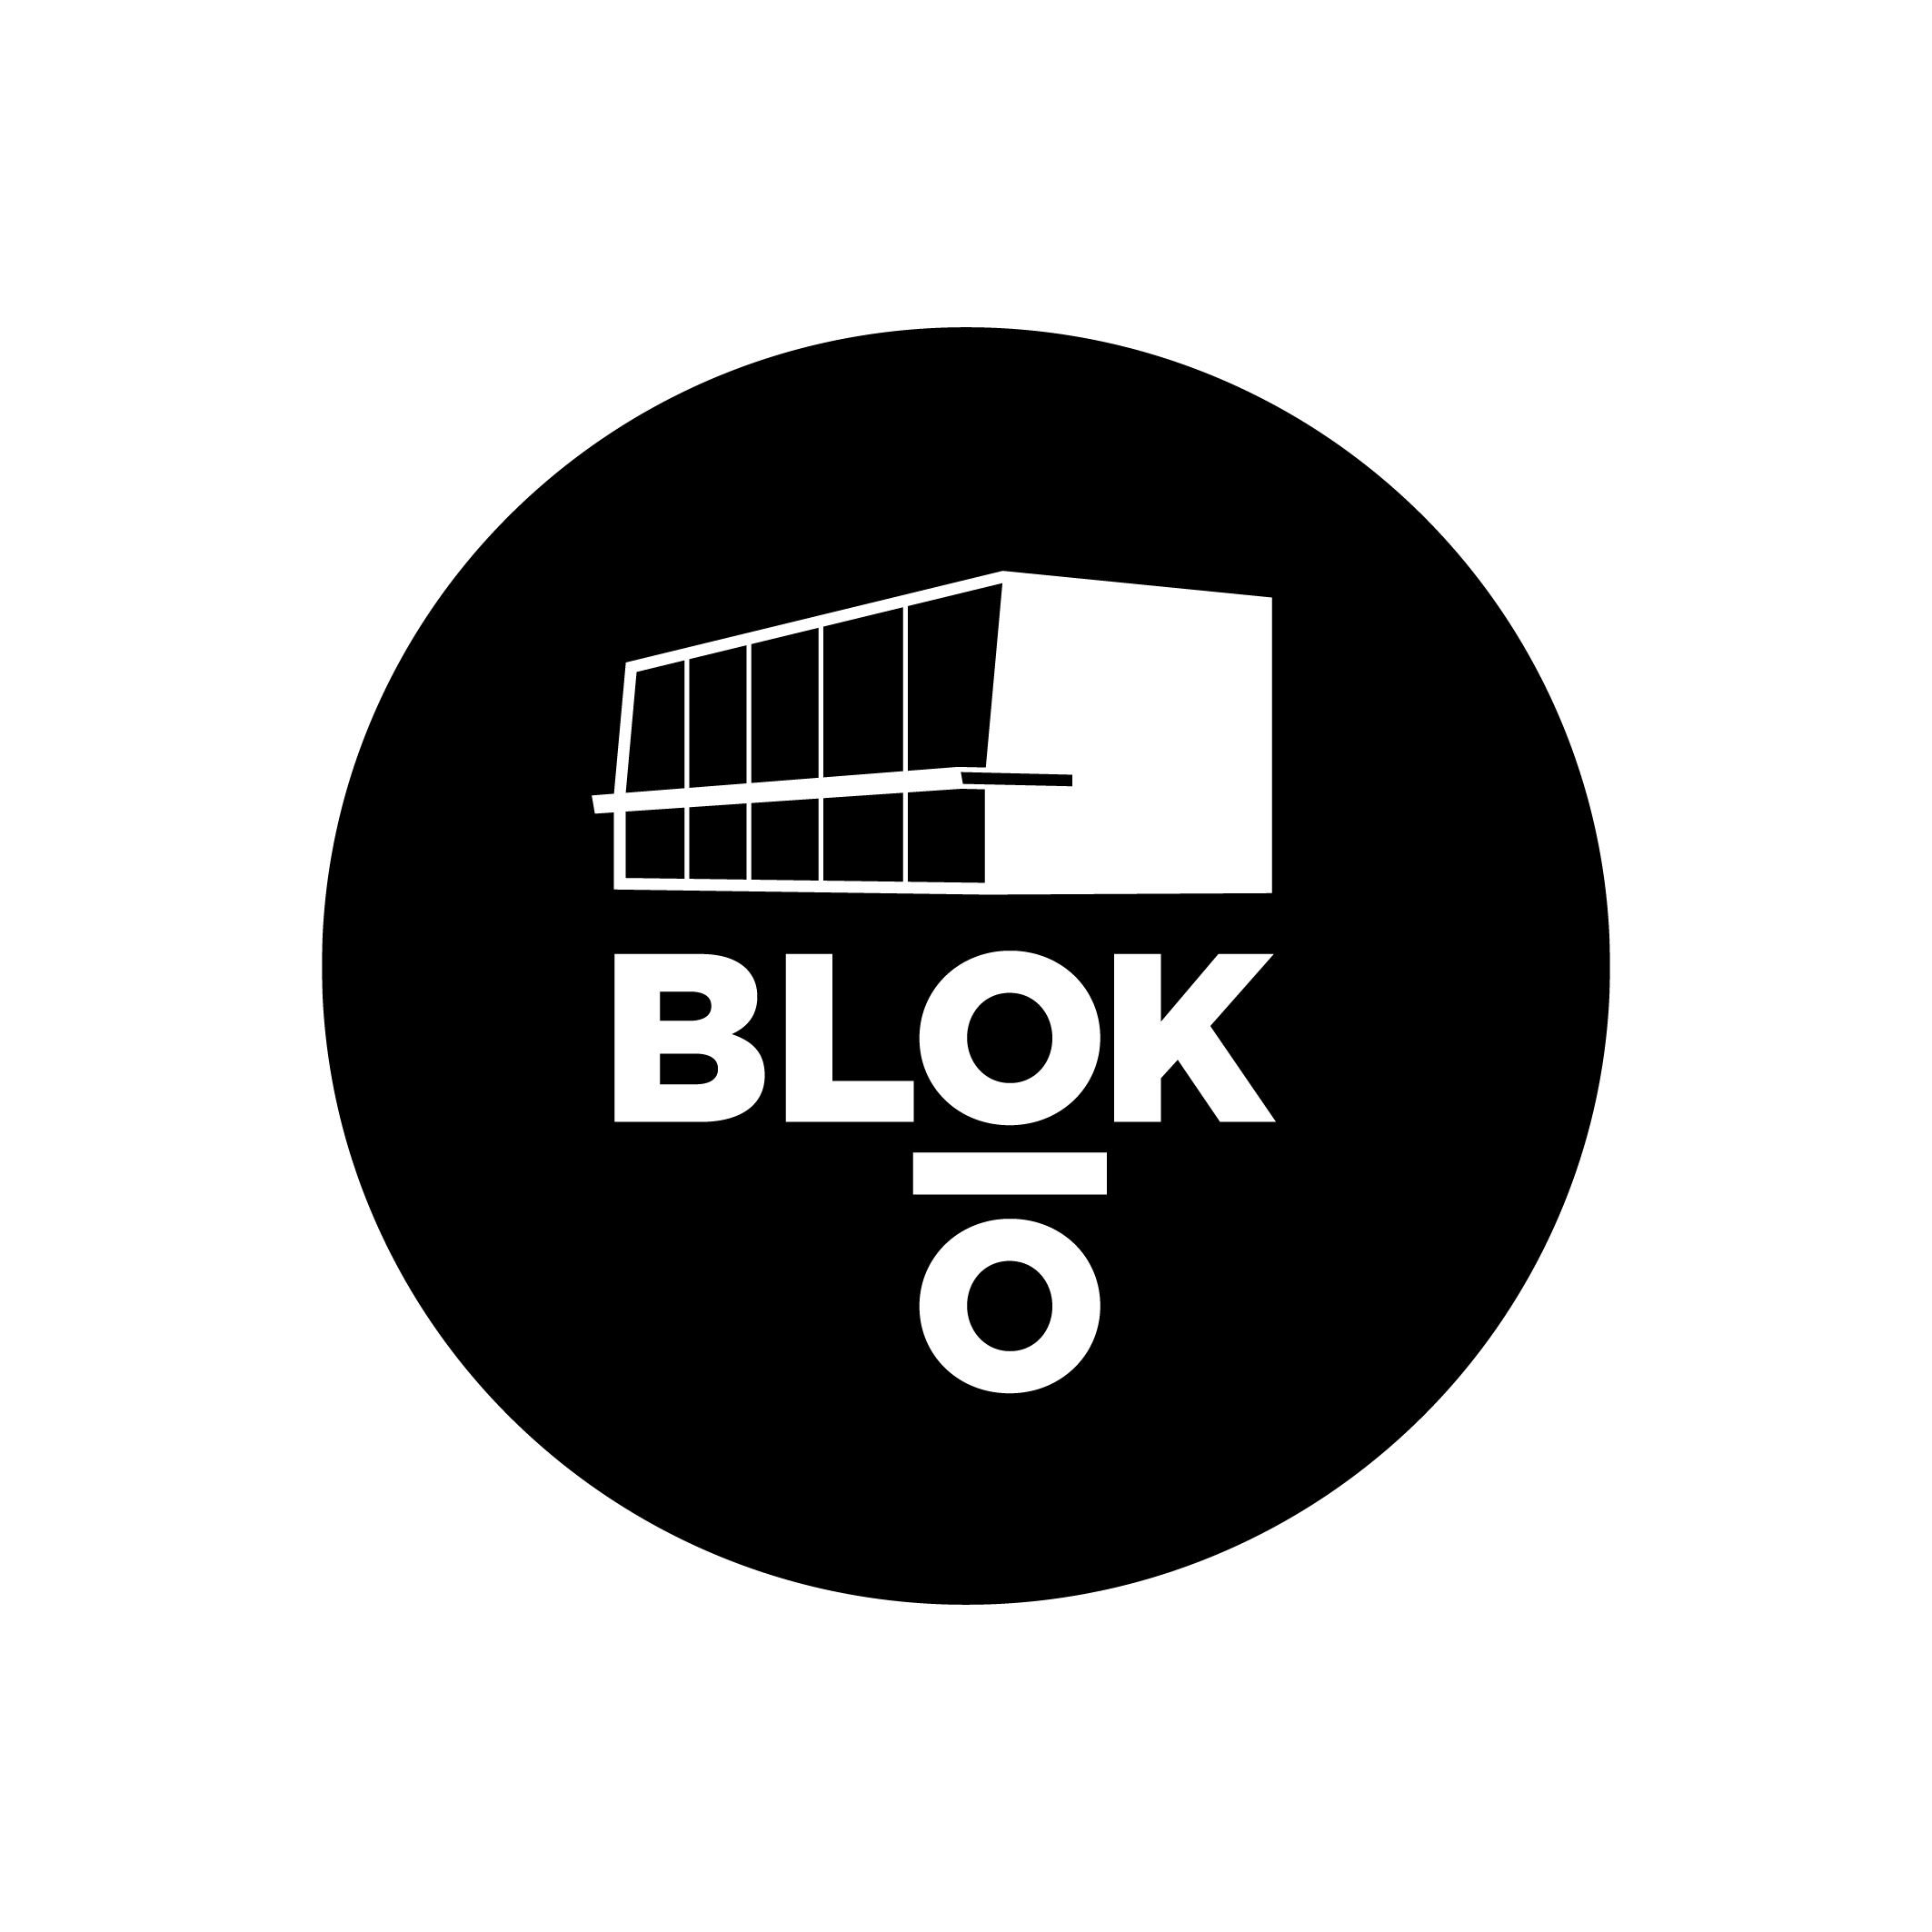 BLOK O Photo